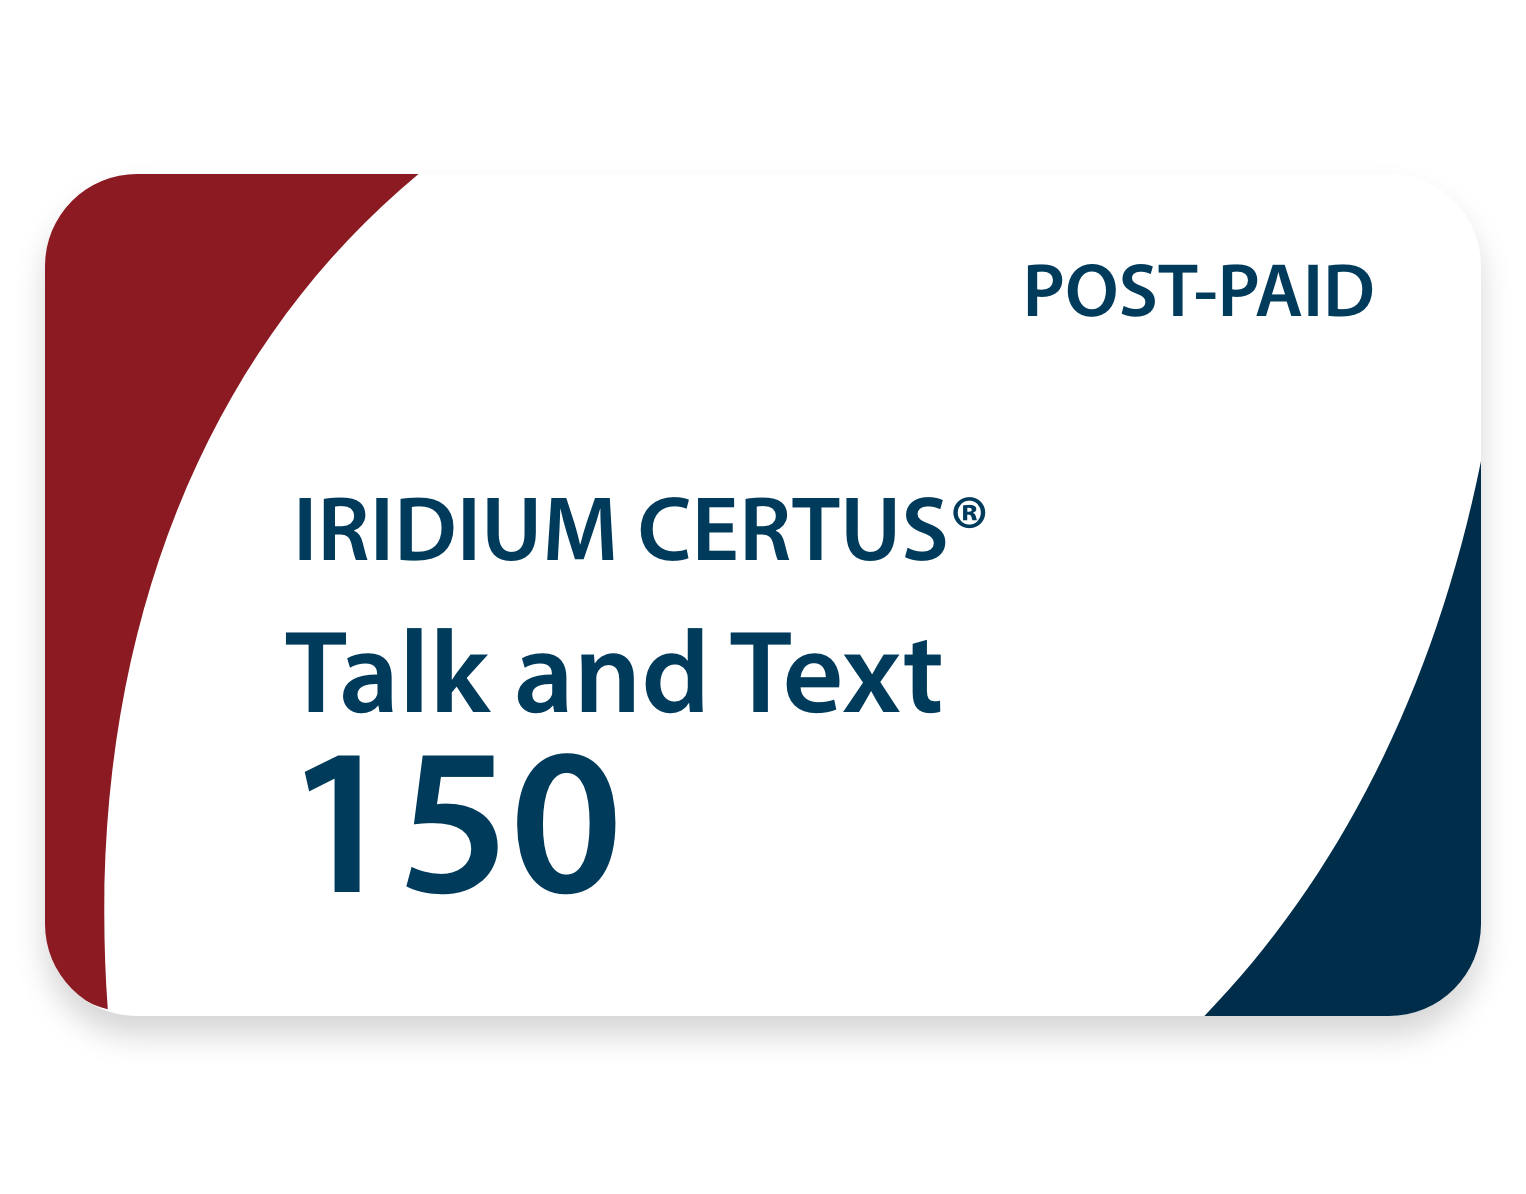 Iridium Certus Post-Paid 150 Talk and Text airtime plan